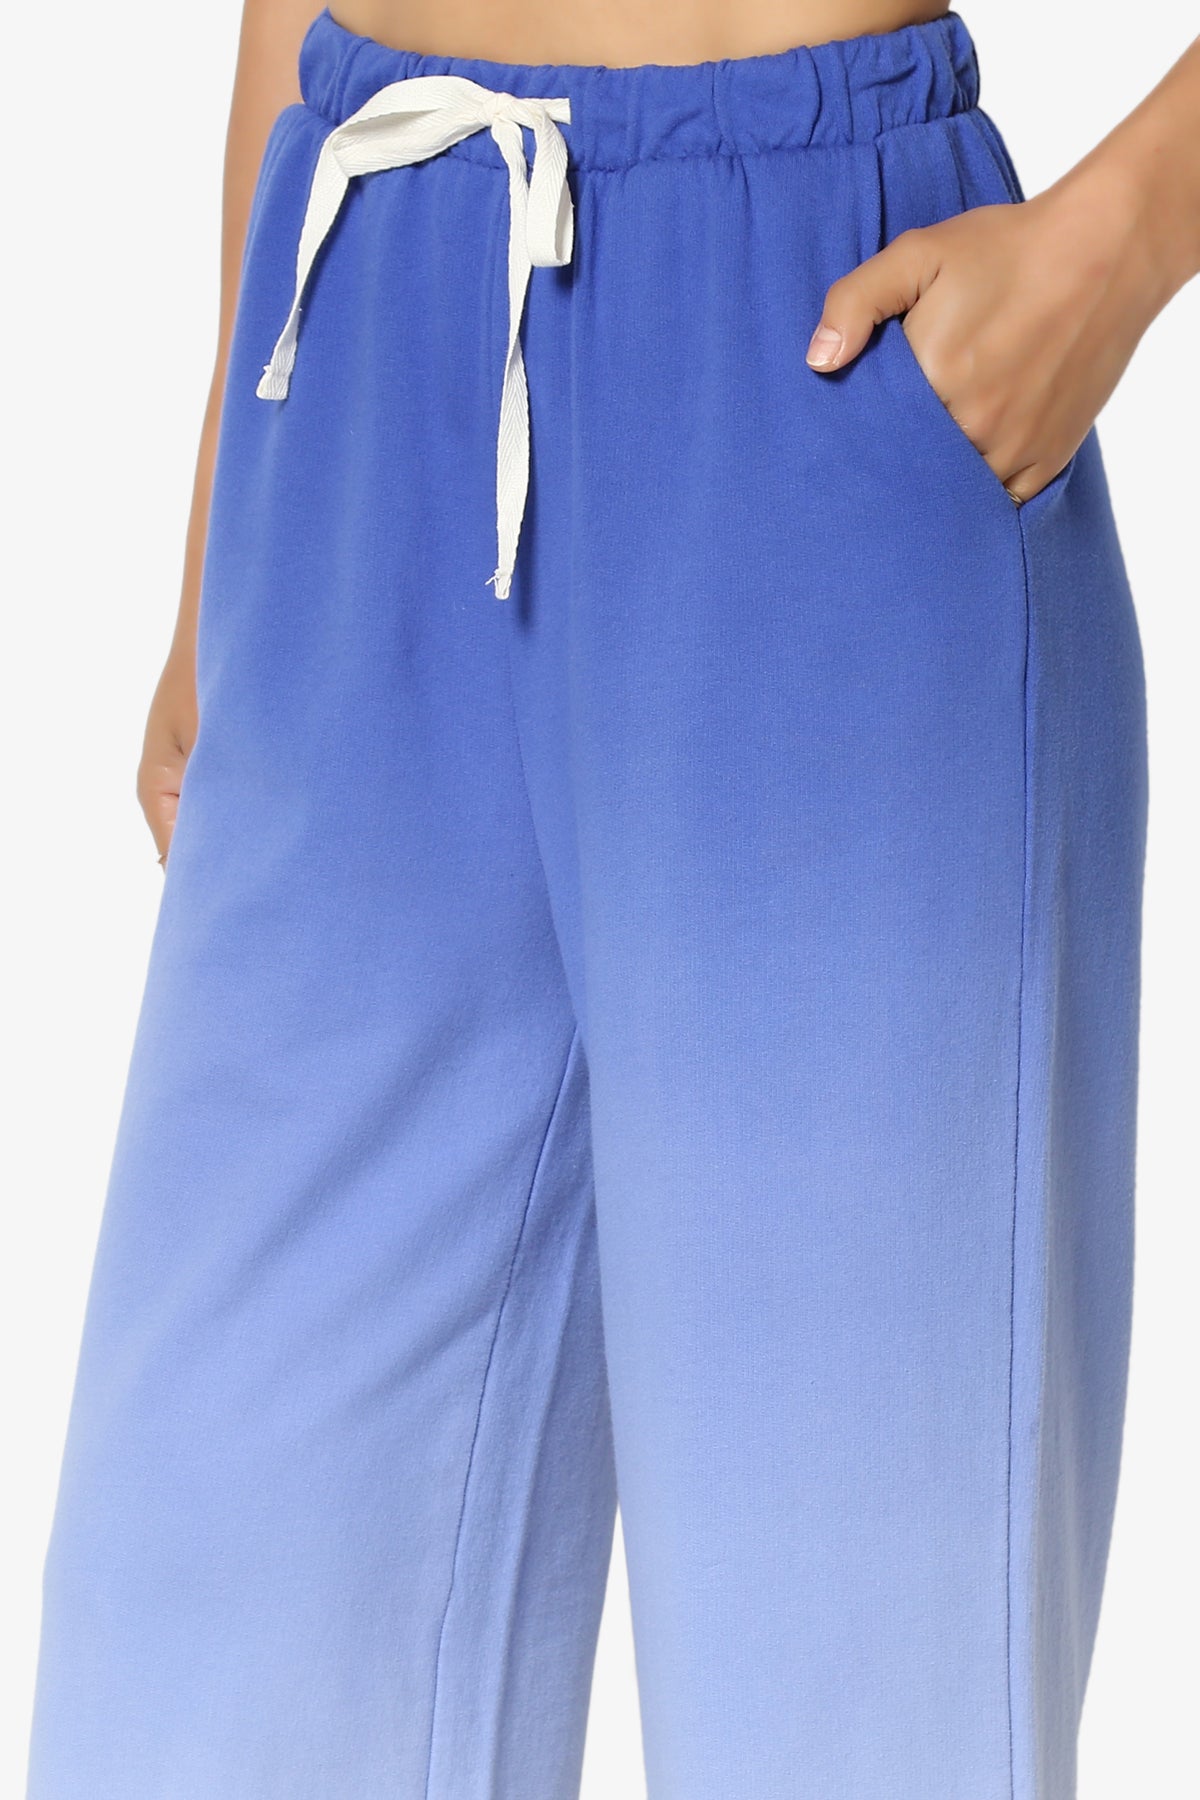 Sarge Dip Dye Raglan Sleeve Top & Lounge Pants SET BRIGHT BLUE_6